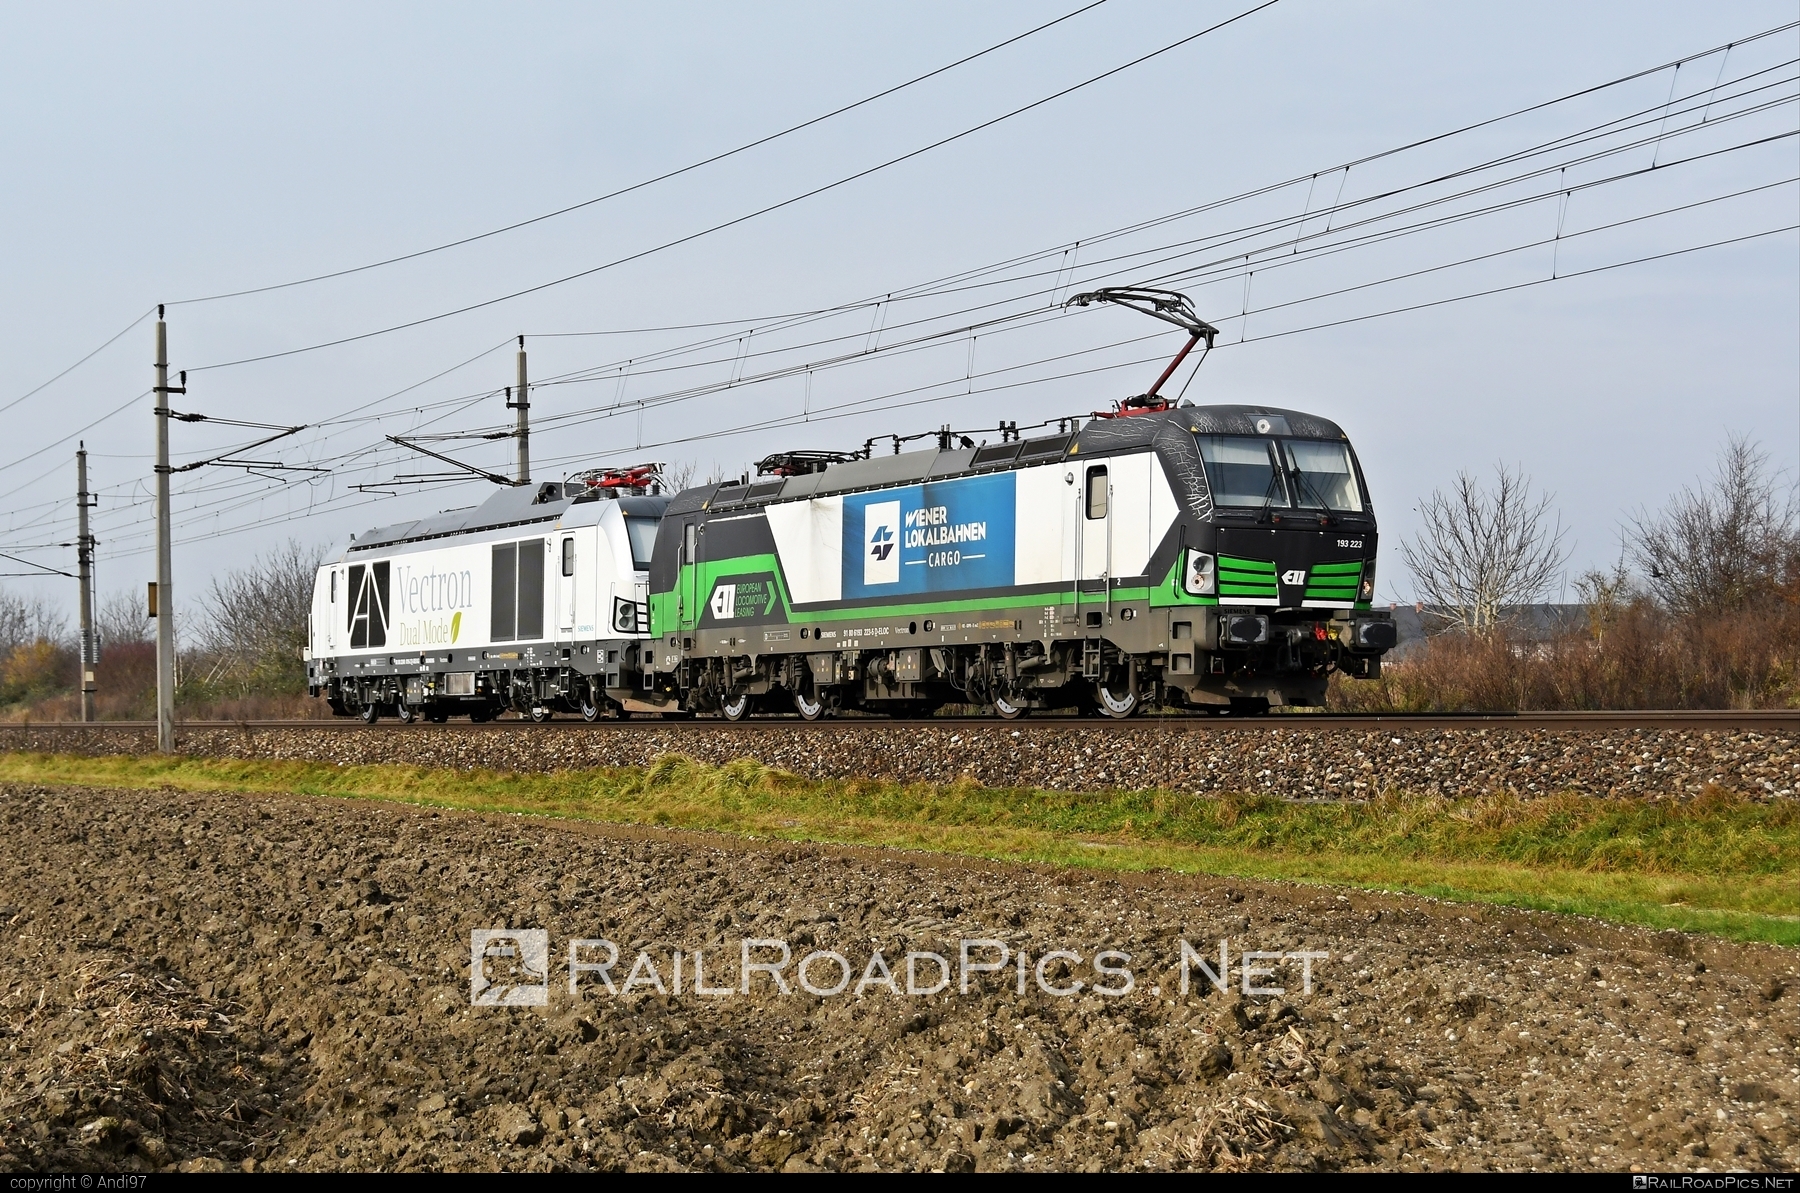 Siemens Vectron AC - 193 223 operated by Wiener Lokalbahnen Cargo GmbH #ell #ellgermany #eloc #europeanlocomotiveleasing #siemens #siemensVectron #siemensVectronAC #vectron #vectronAC #wienerlokalbahnencargo #wienerlokalbahnencargogmbh #wlc